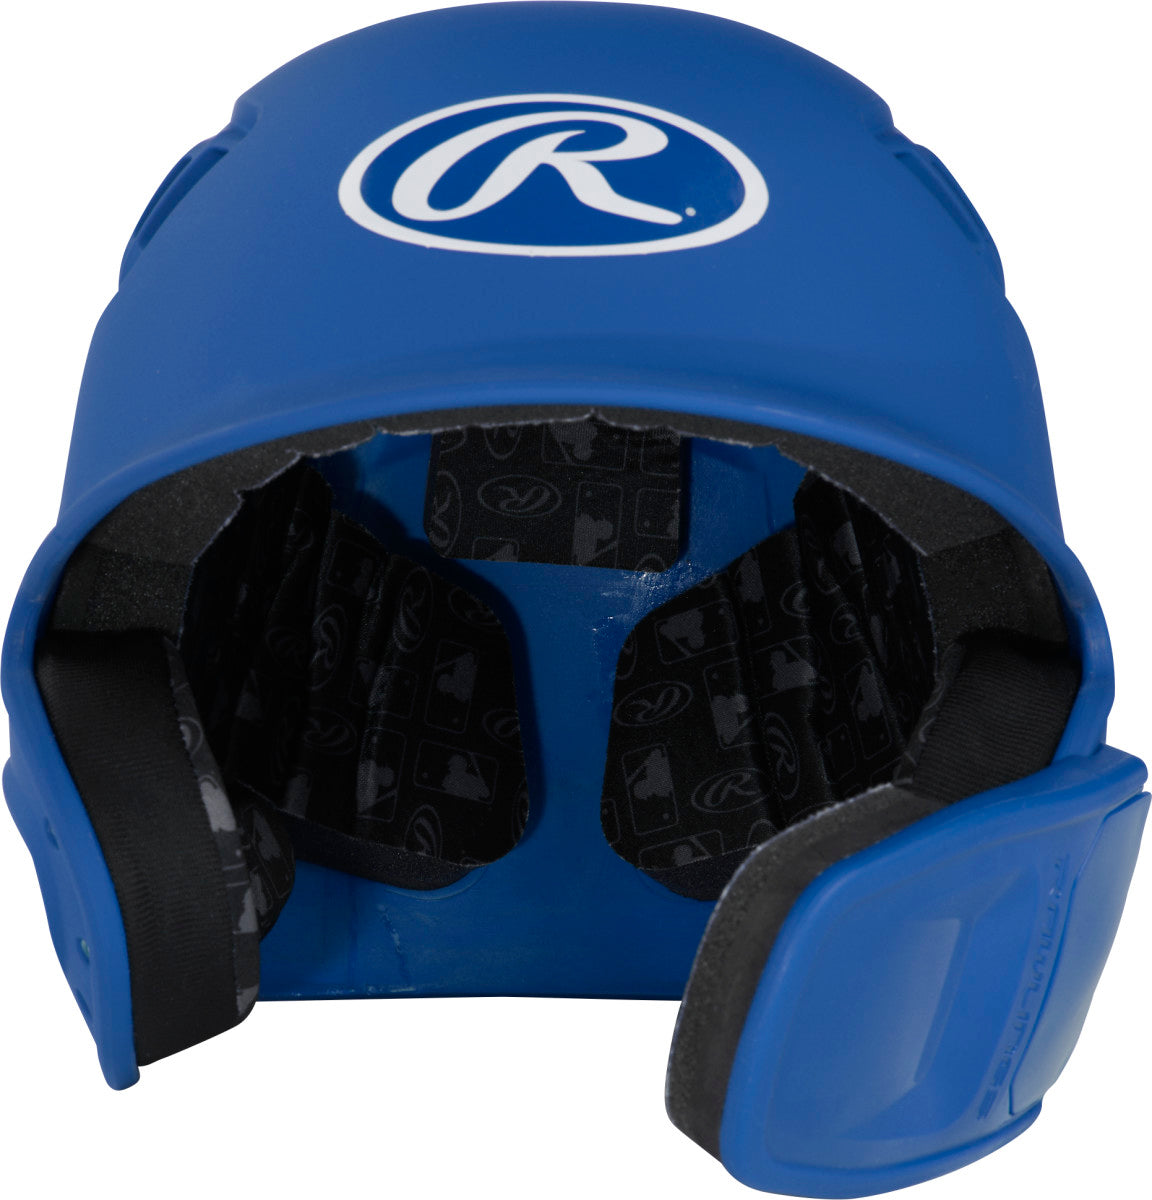 Rawlings R16 Velo Helmet - 1 Tone Matte Reversible EXT - SR